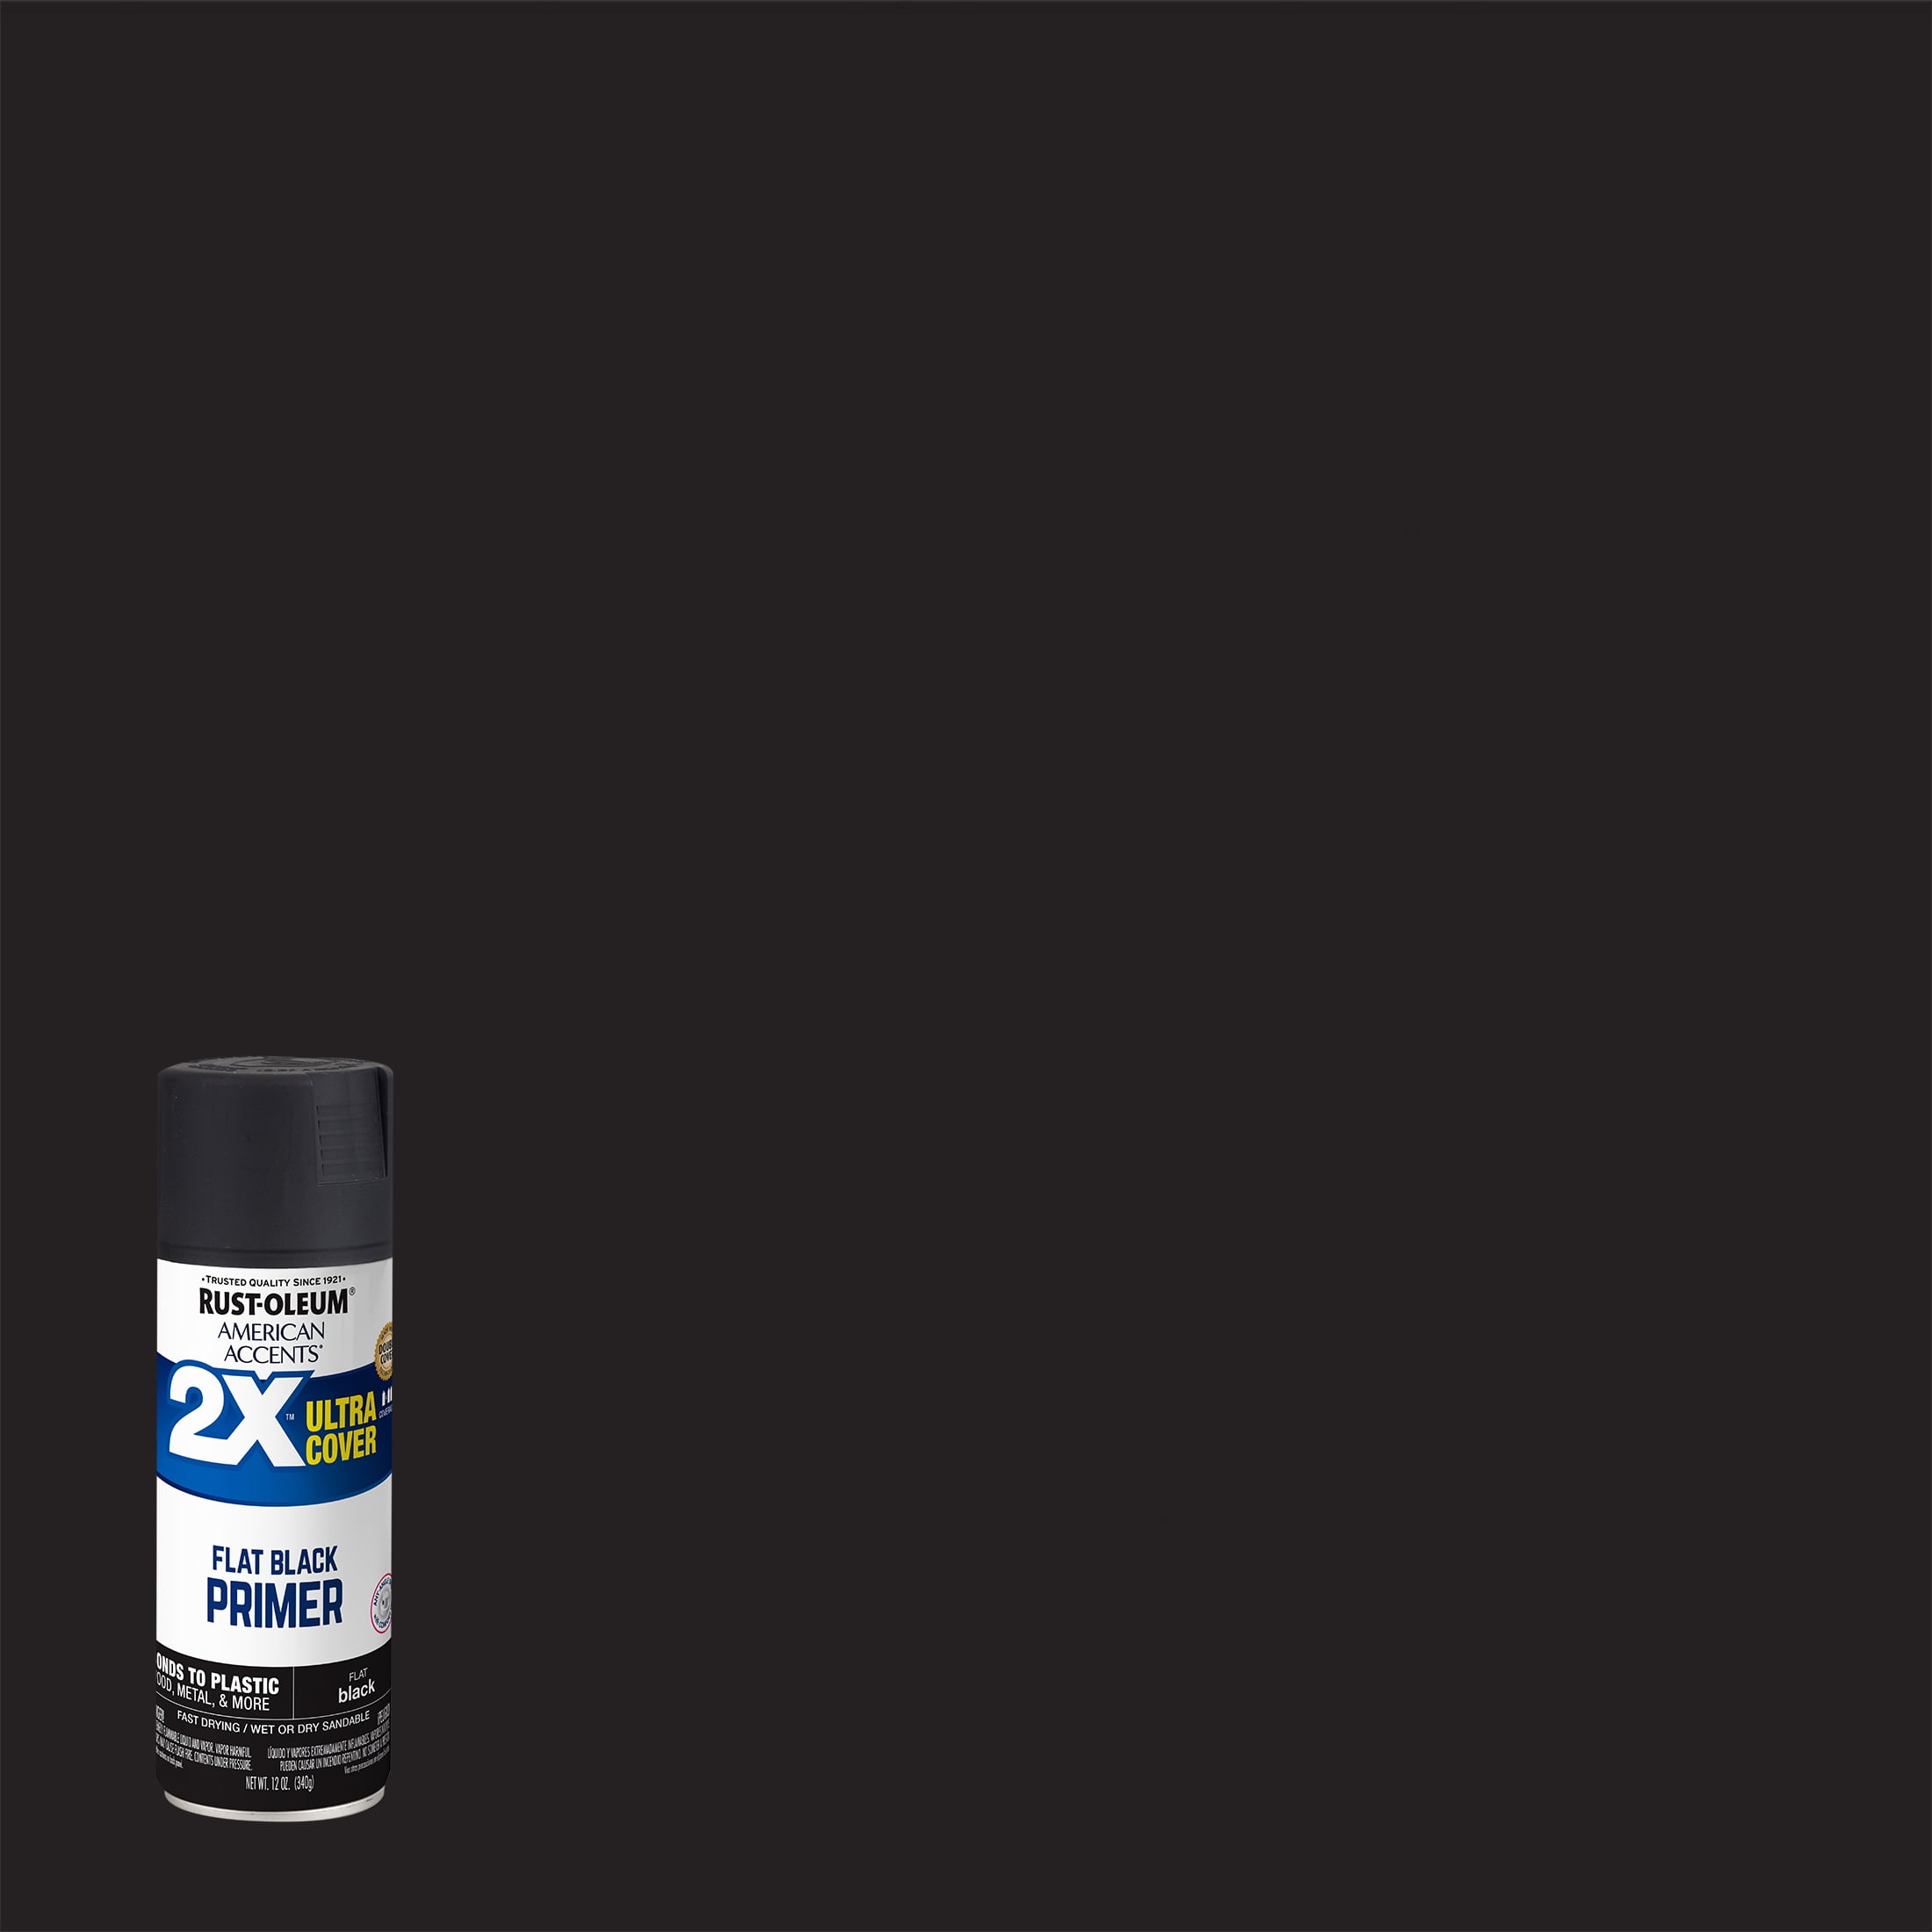 Rust-Oleum 12 oz. Dark Green Automotive Self-Etching Spray Primer, Flat